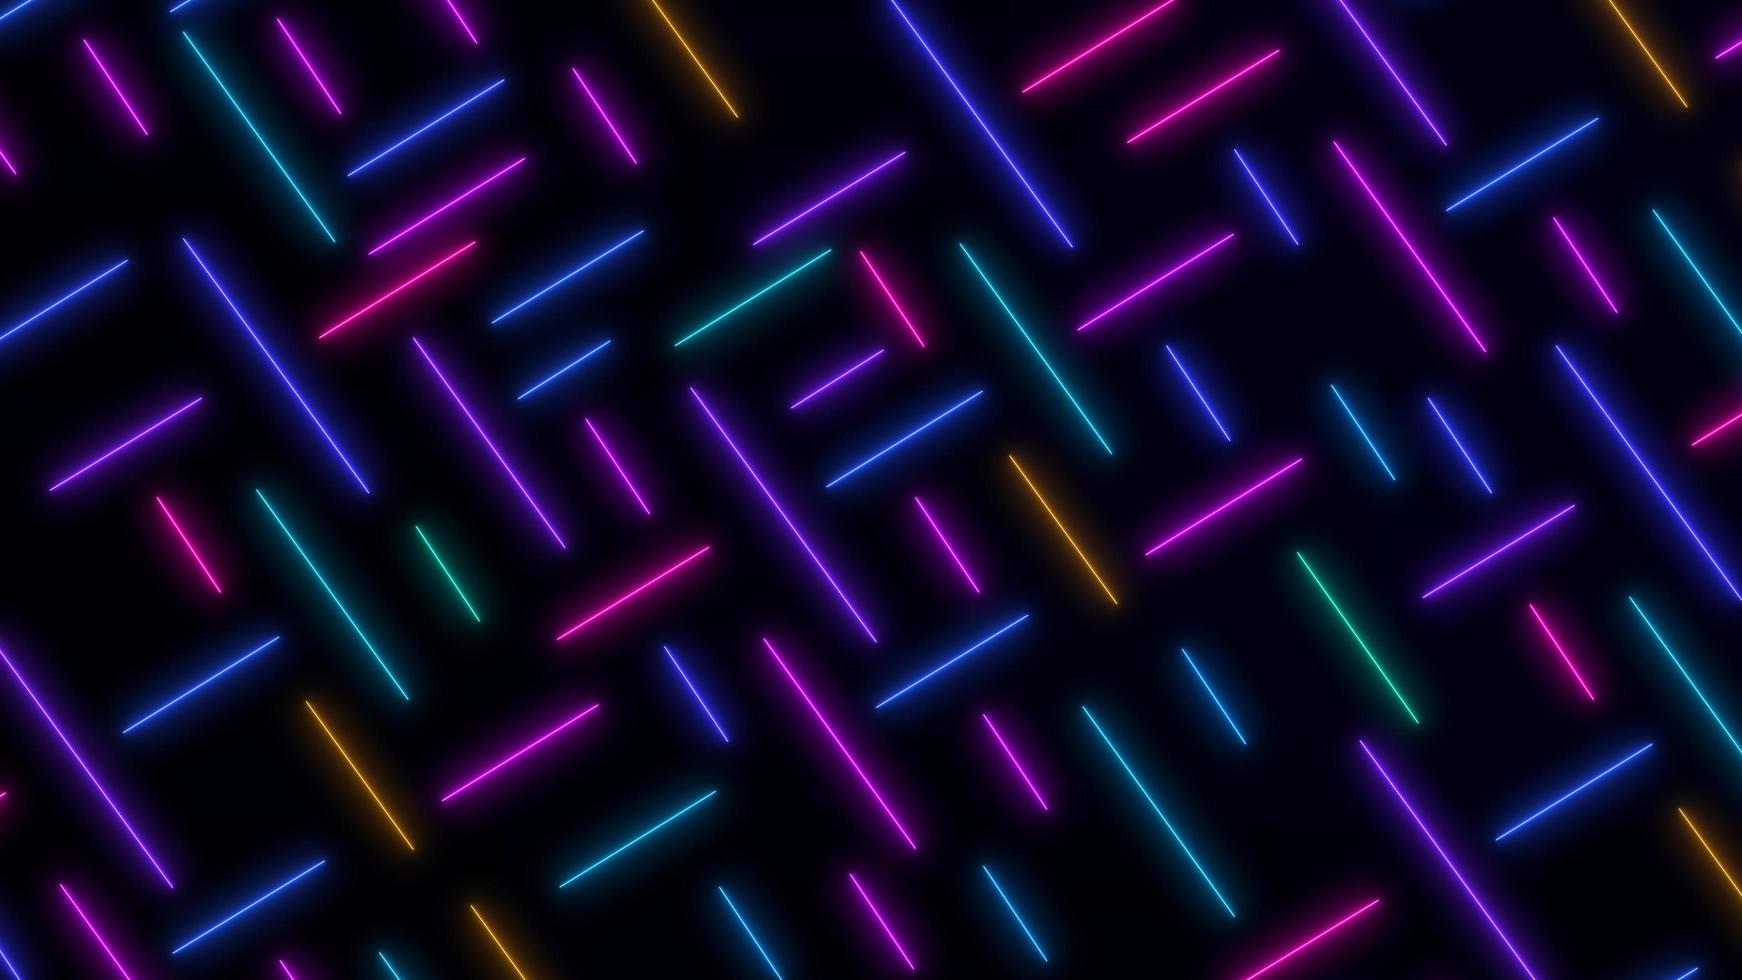 abstrato retro sci-fi neon brilhante lente flare colorido em fundo preto. laser show design colorido para tecnologias de publicidade de banners. estilo retro dos anos 80 foto